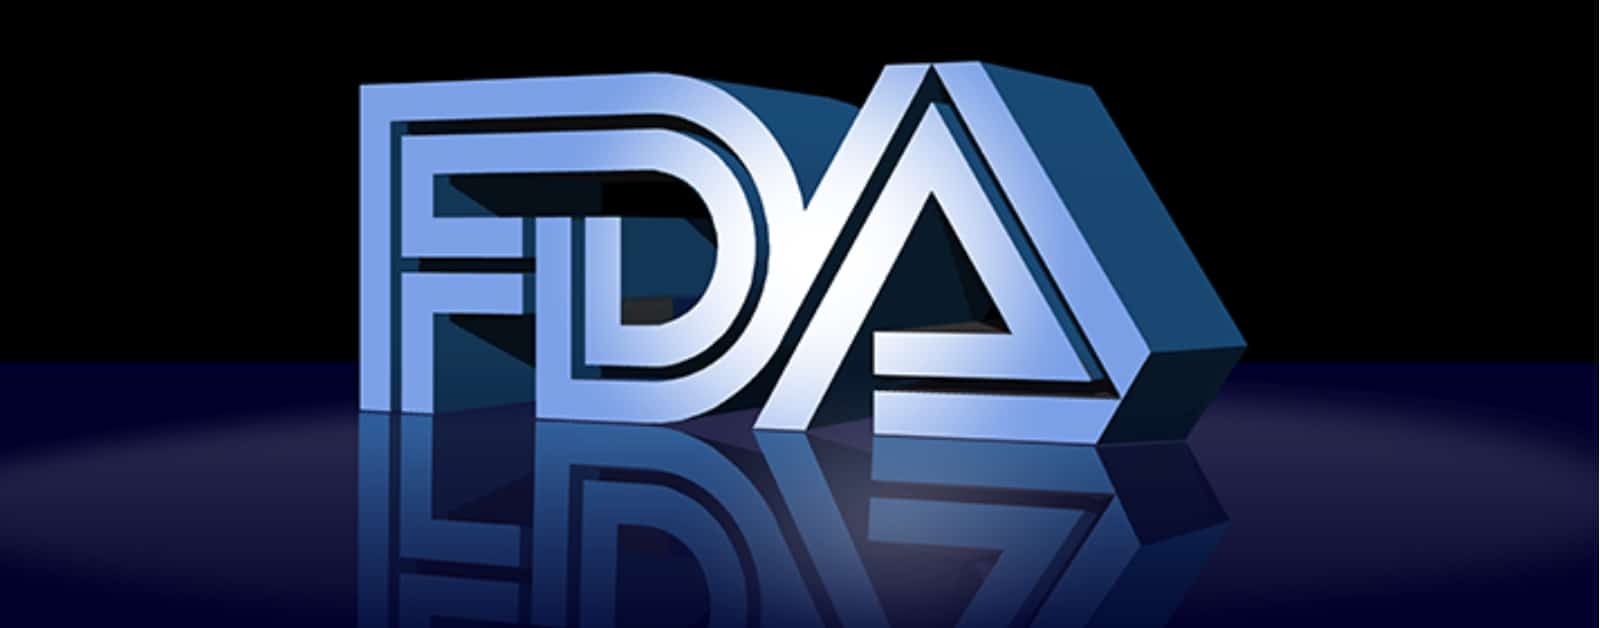 FDA Program Could Streamline Apple Glucose Monitor